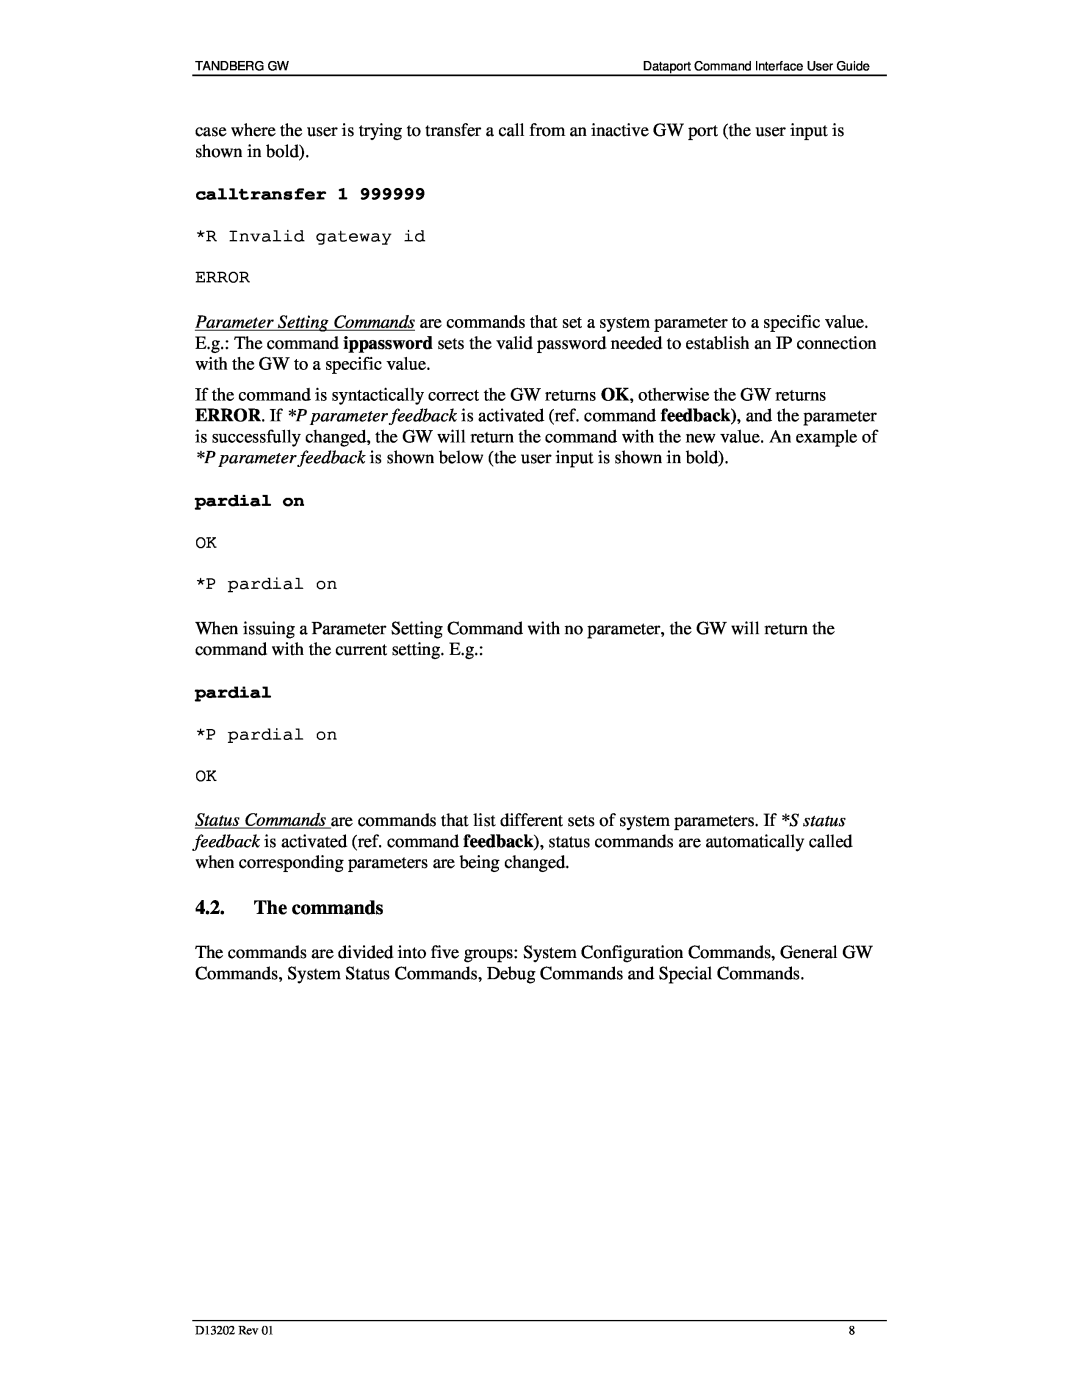 TANDBERG D13202 manual The commands, calltransfer 1, pardial on 